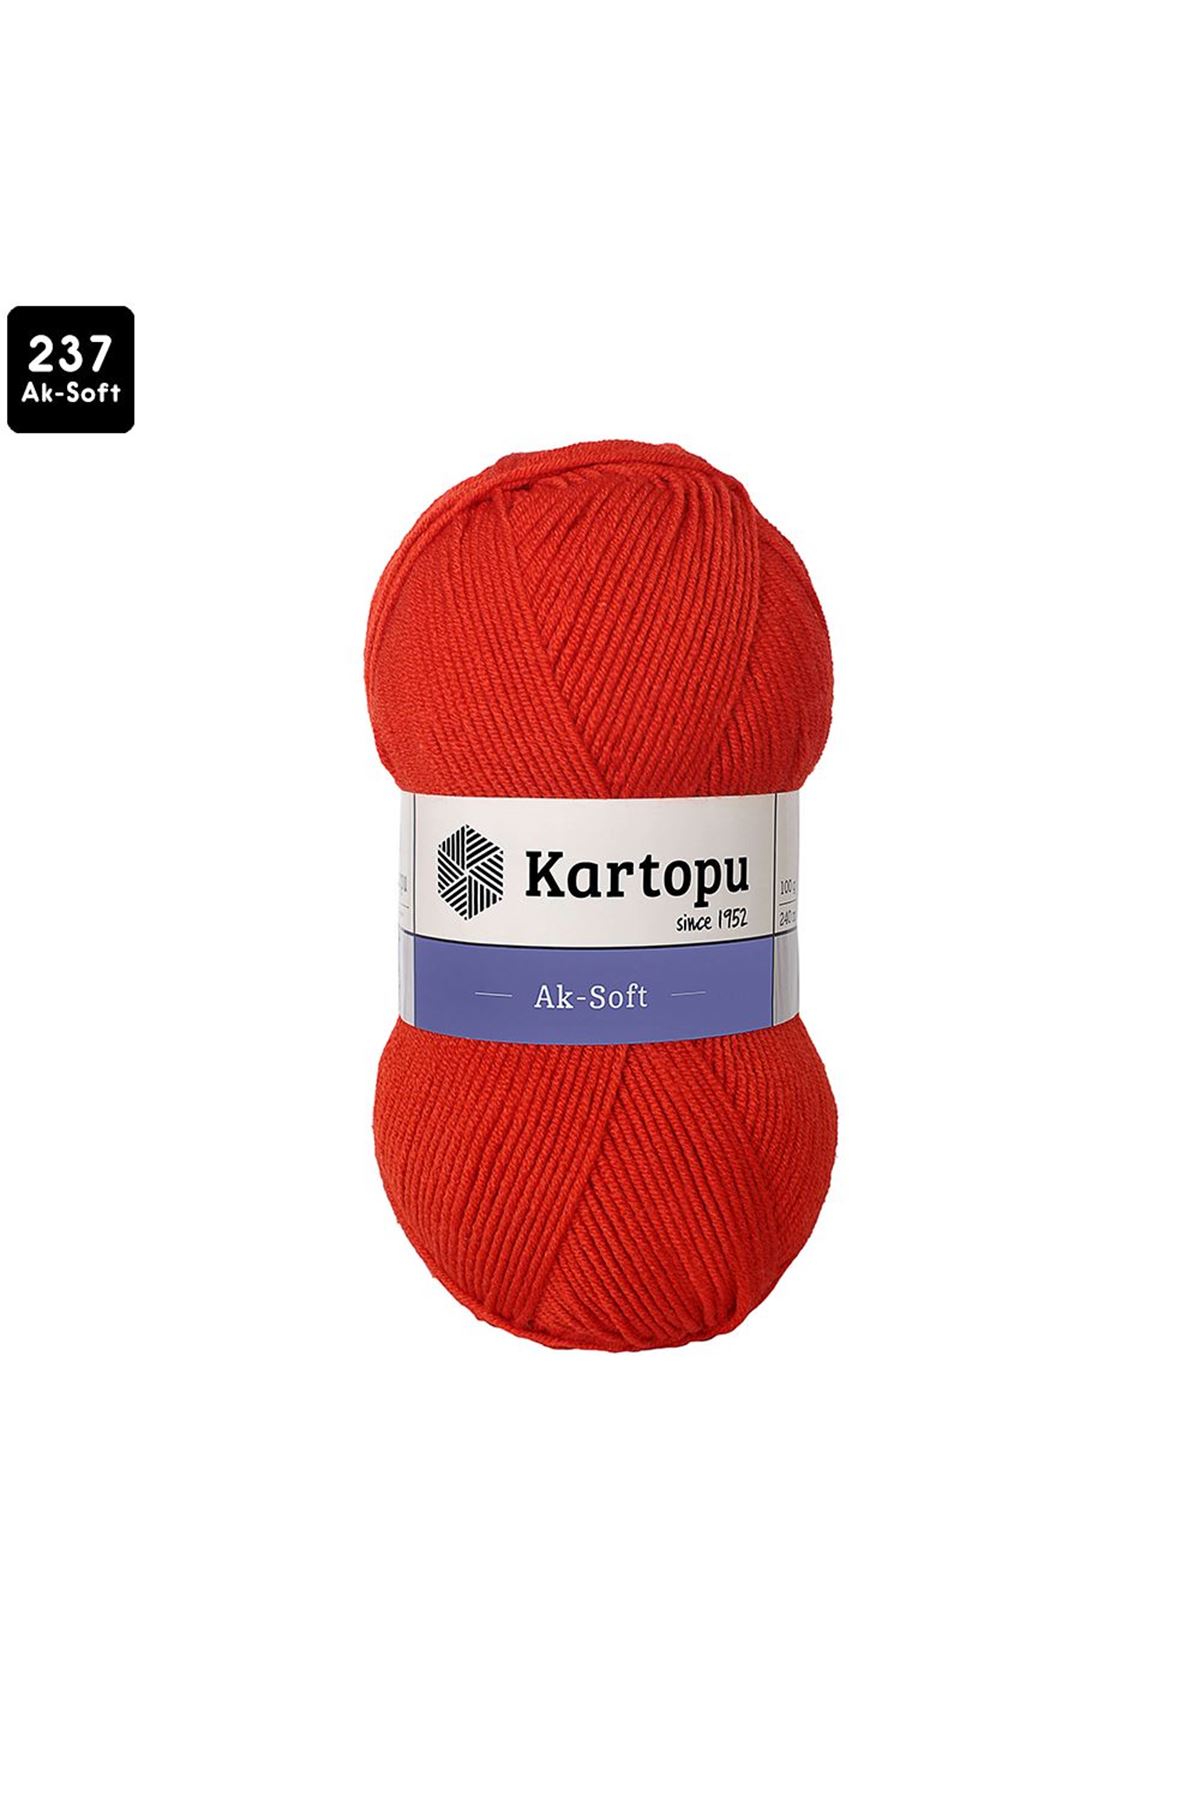 Kartopu Ak-Soft Renk No:237